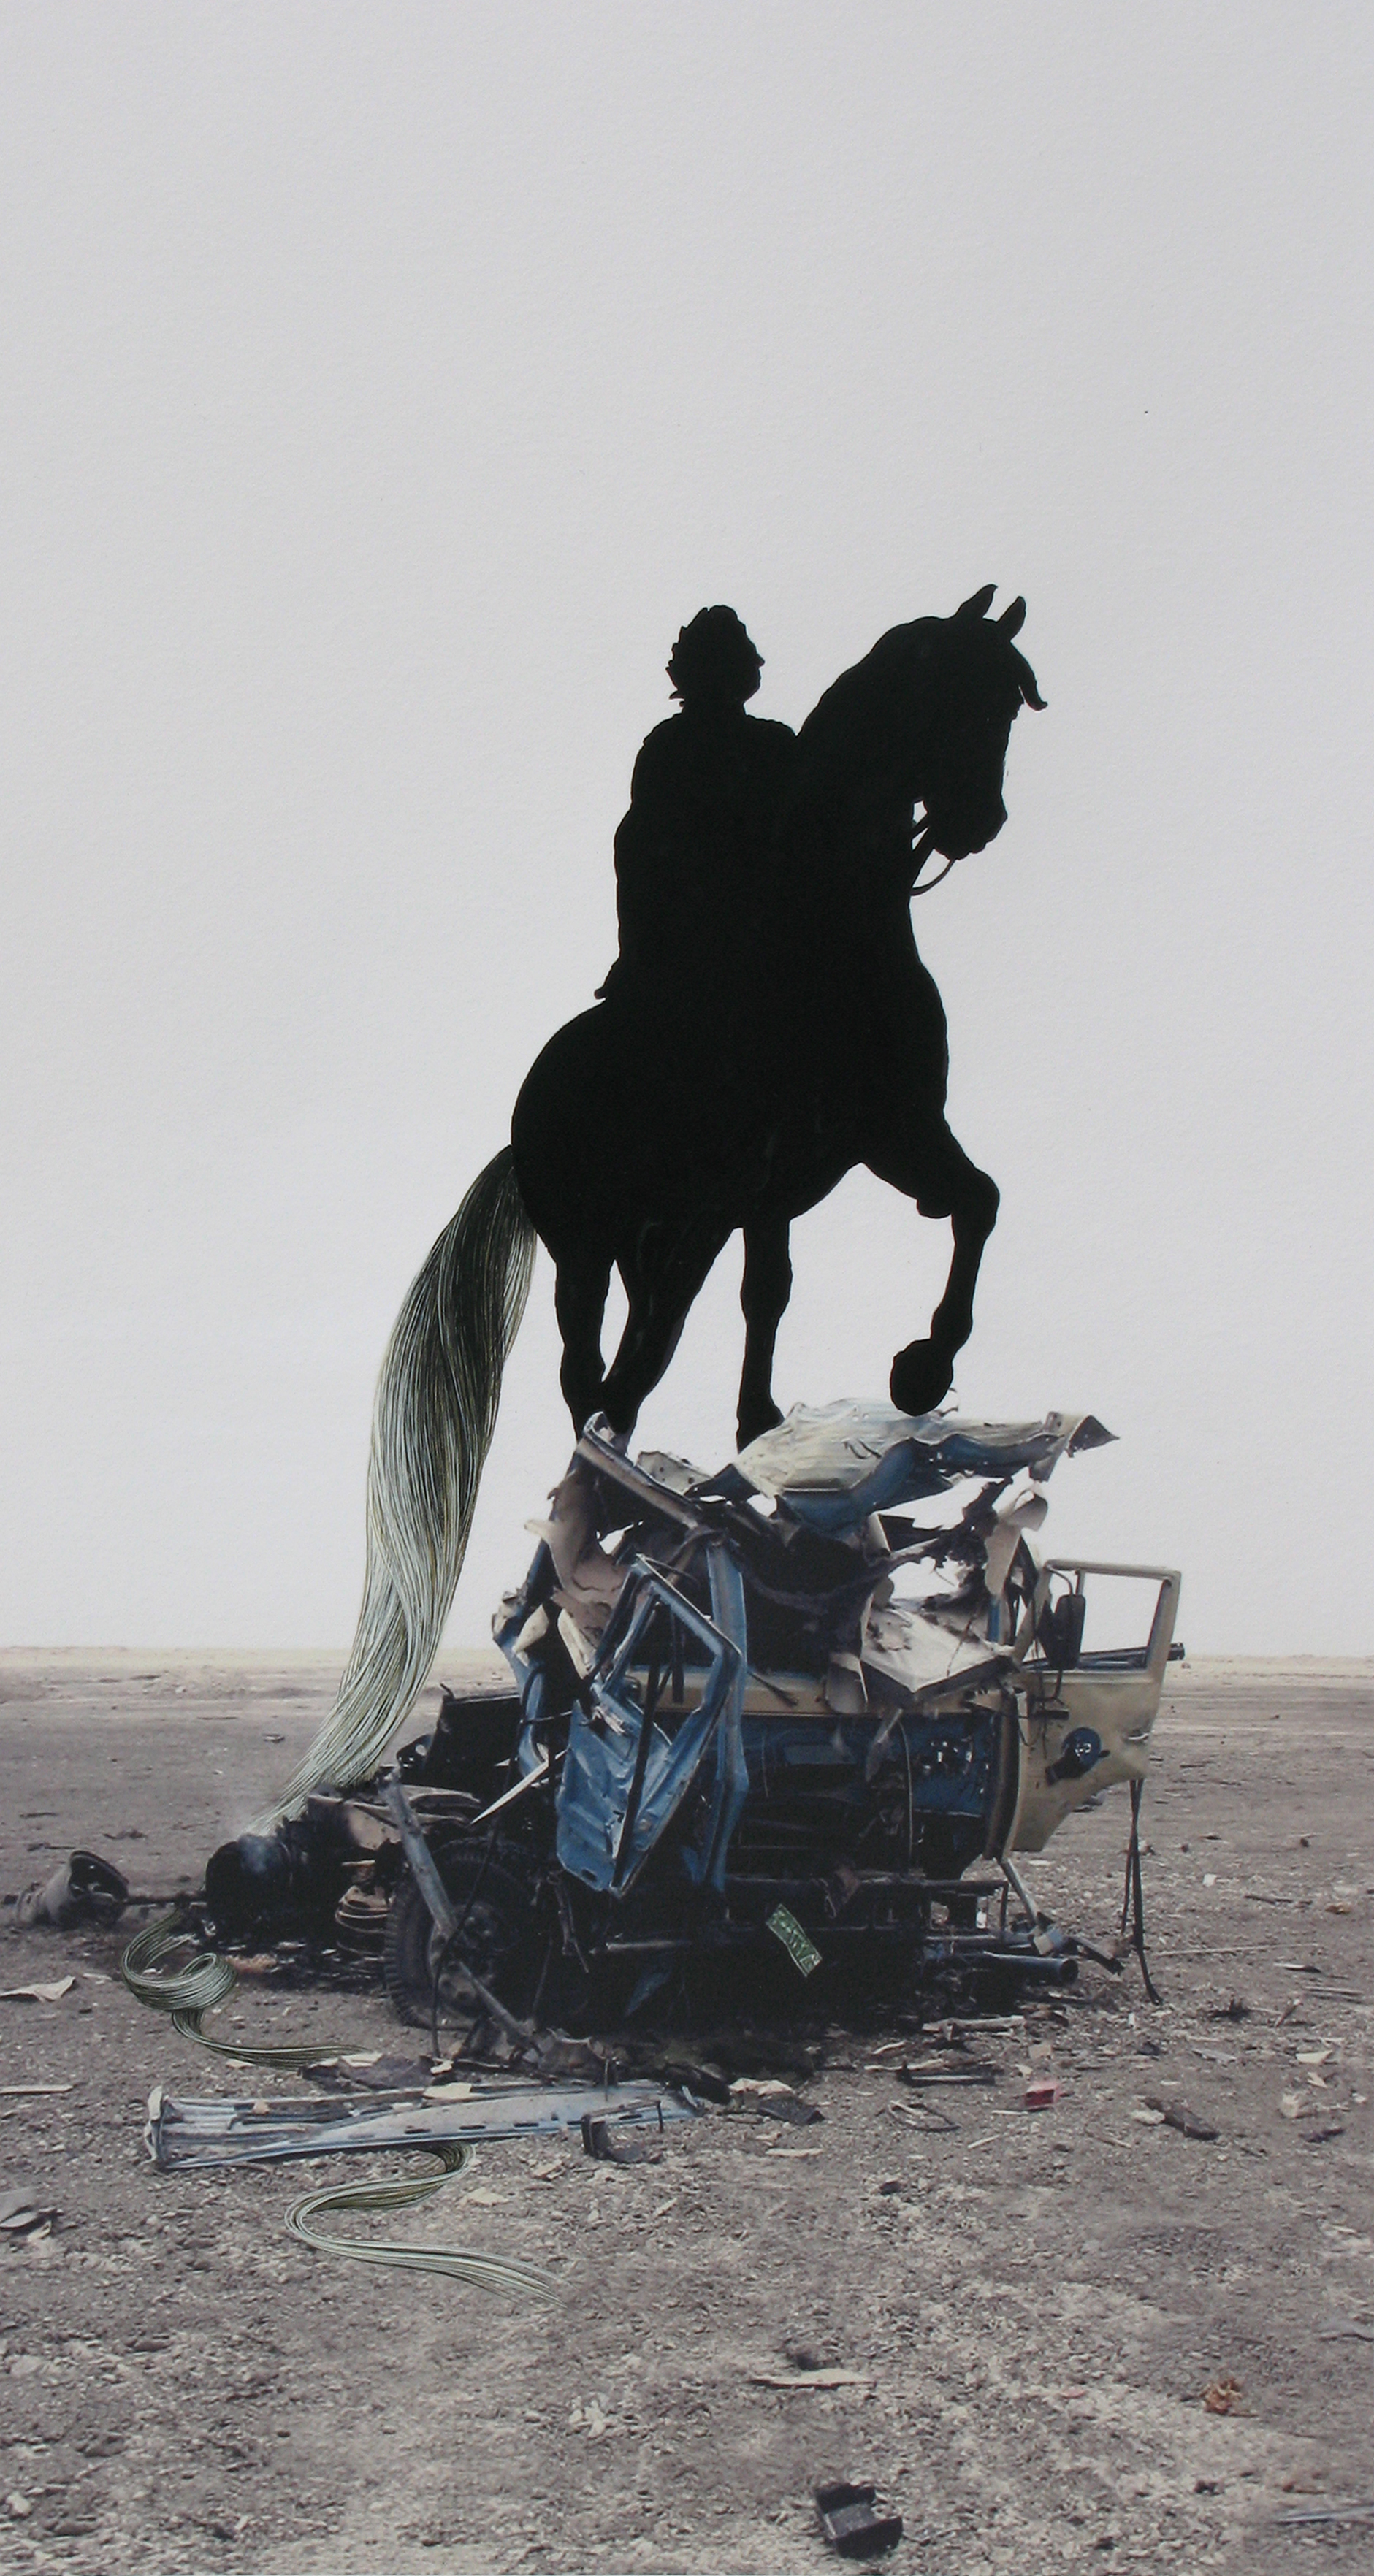 Equus: Iraq Truck Bomb with Frederik V, 2009